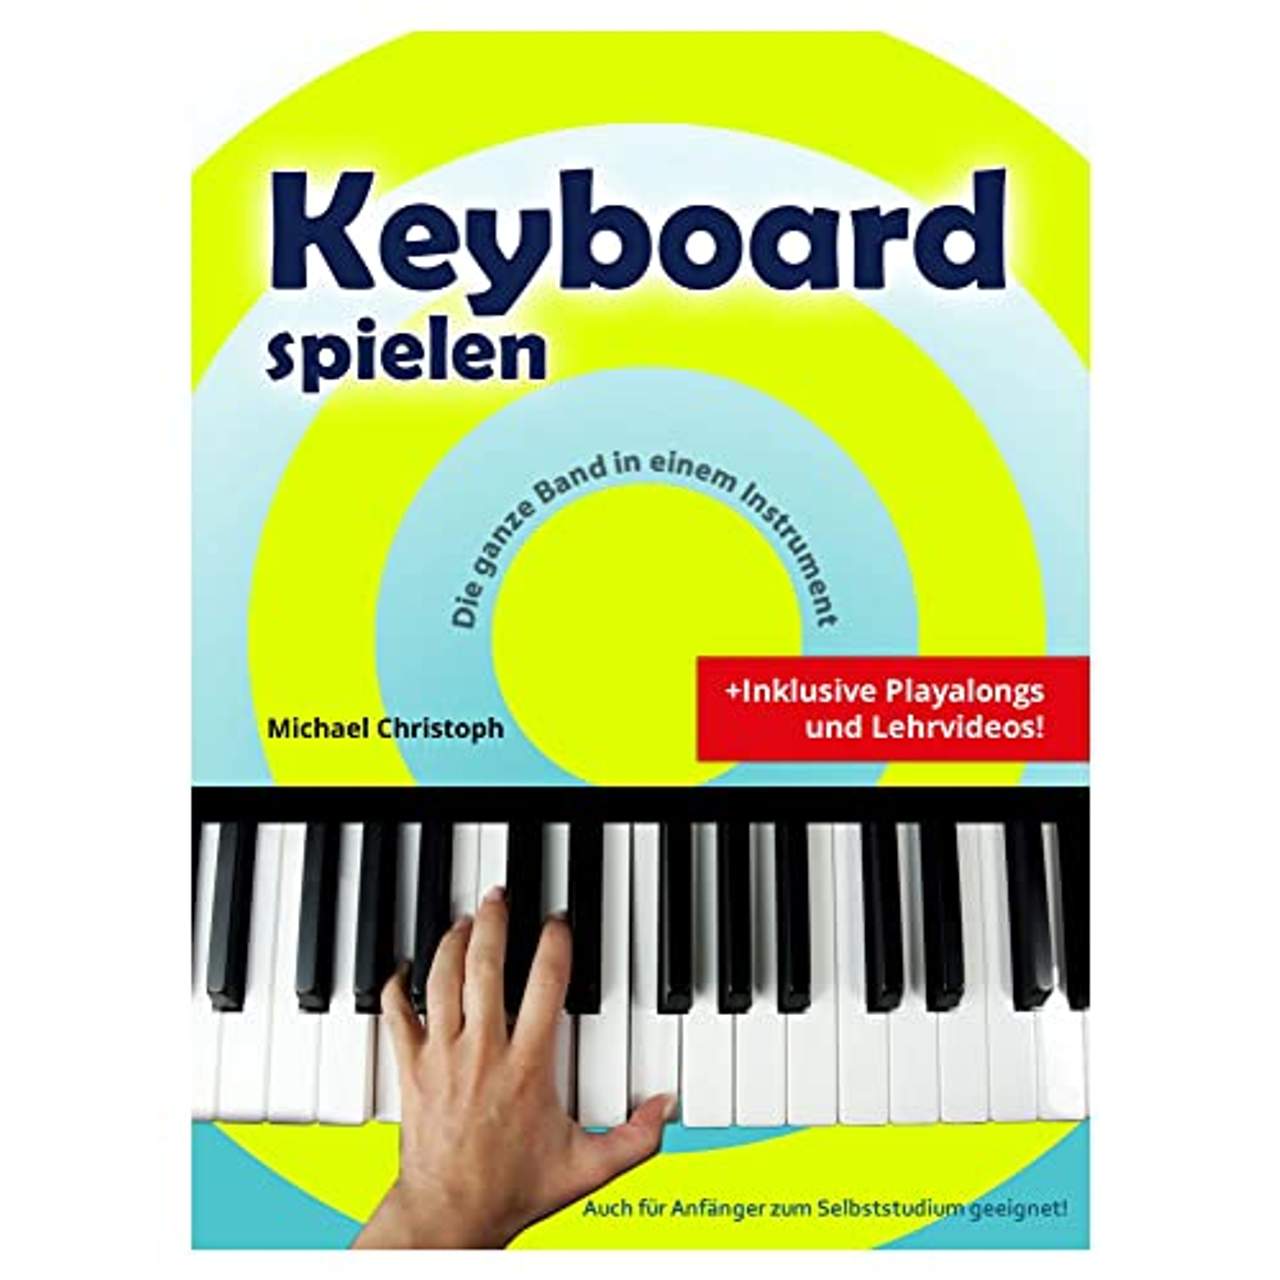 Korg EK-50 Keyboard Set